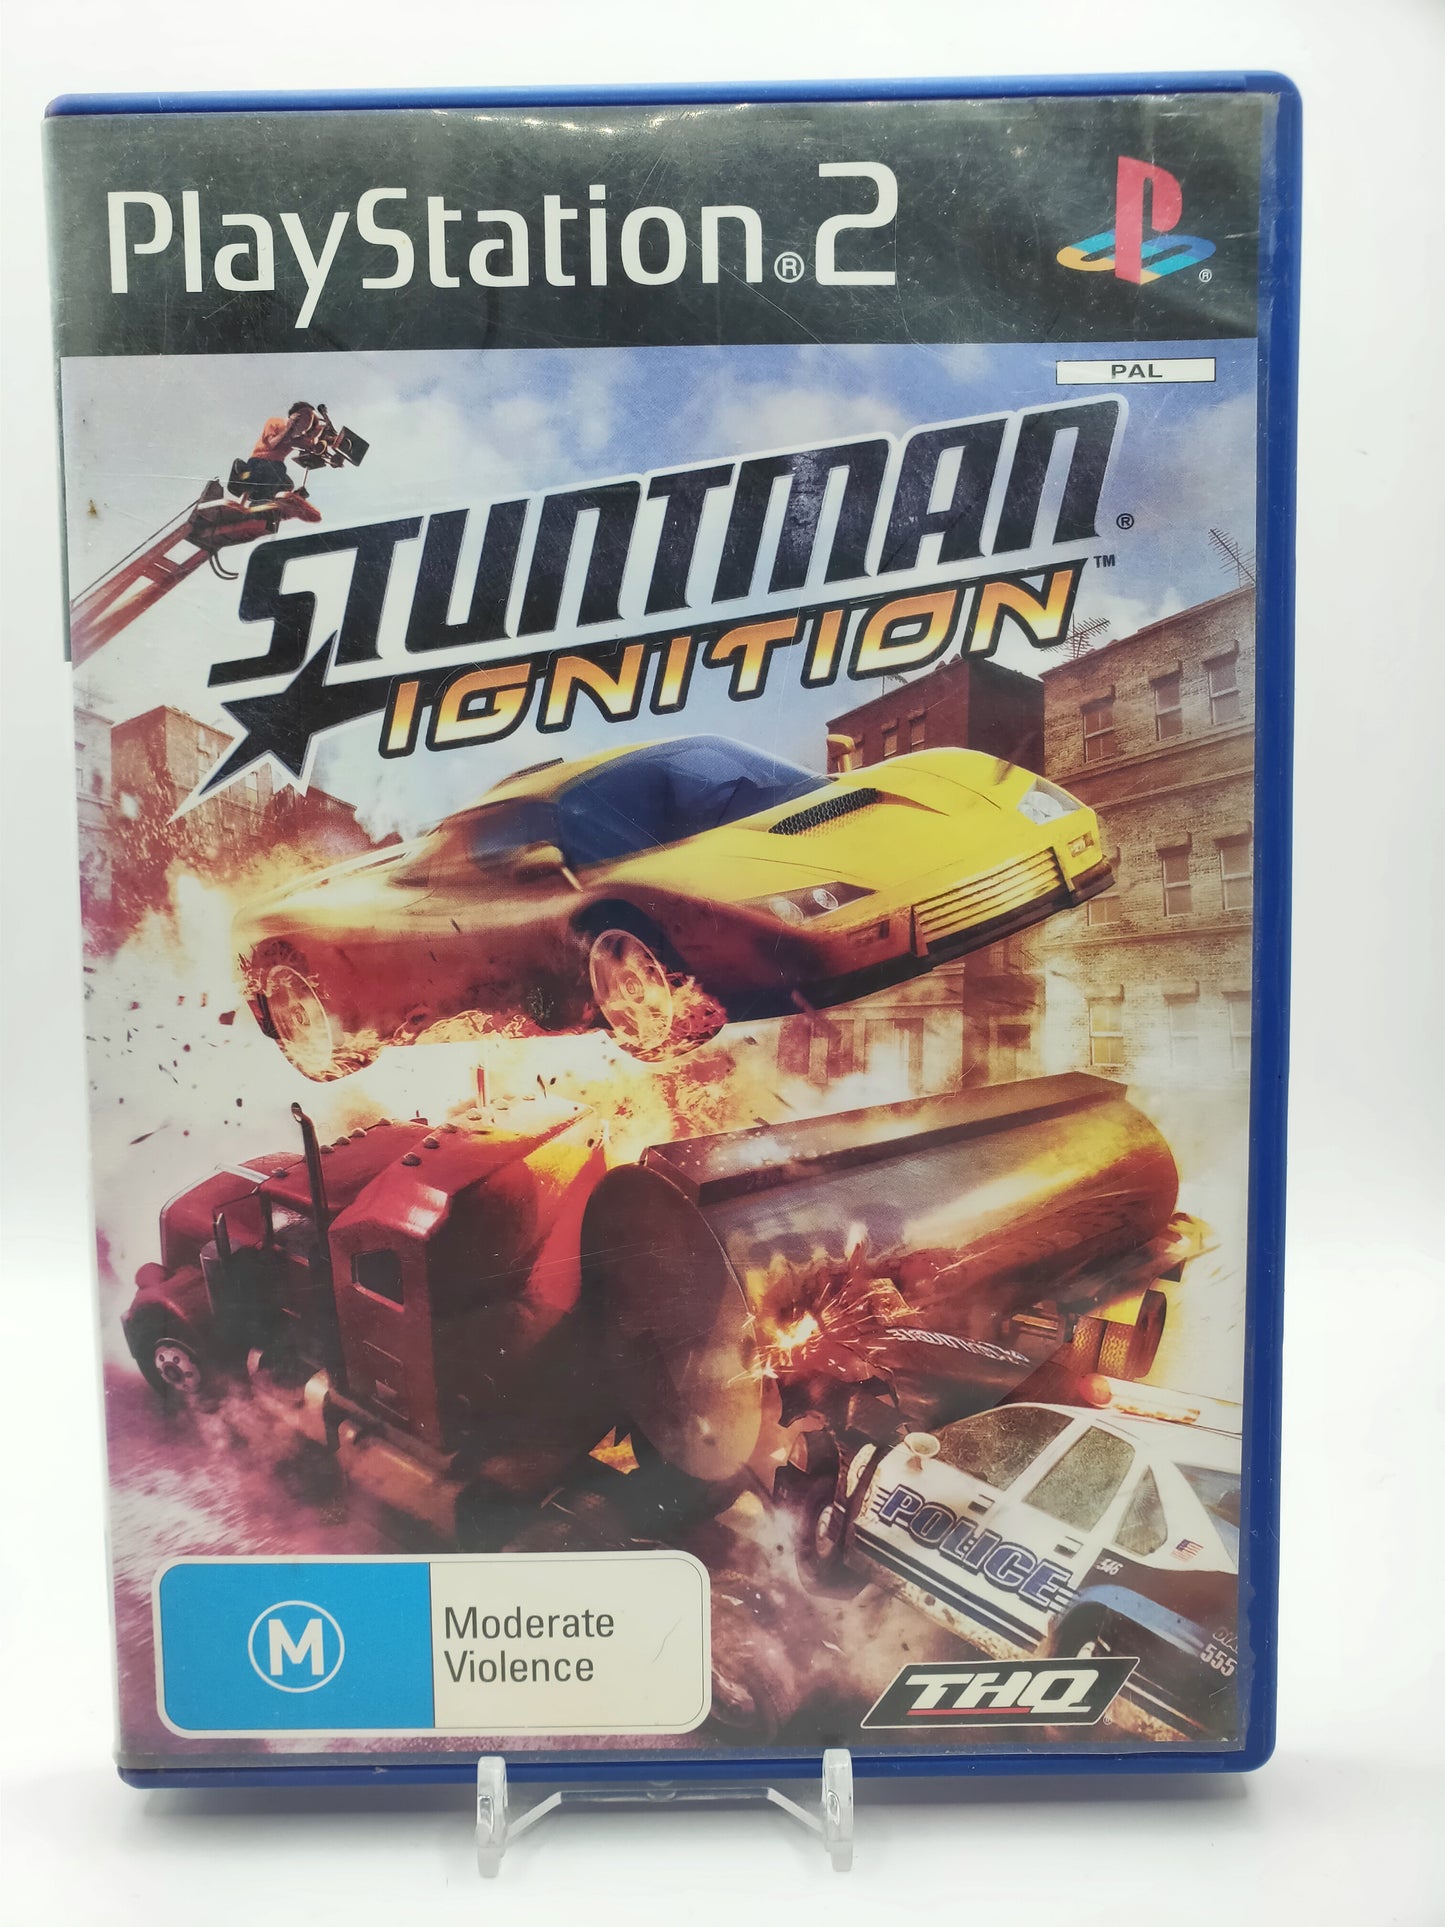 Stuntman Ignition PS2